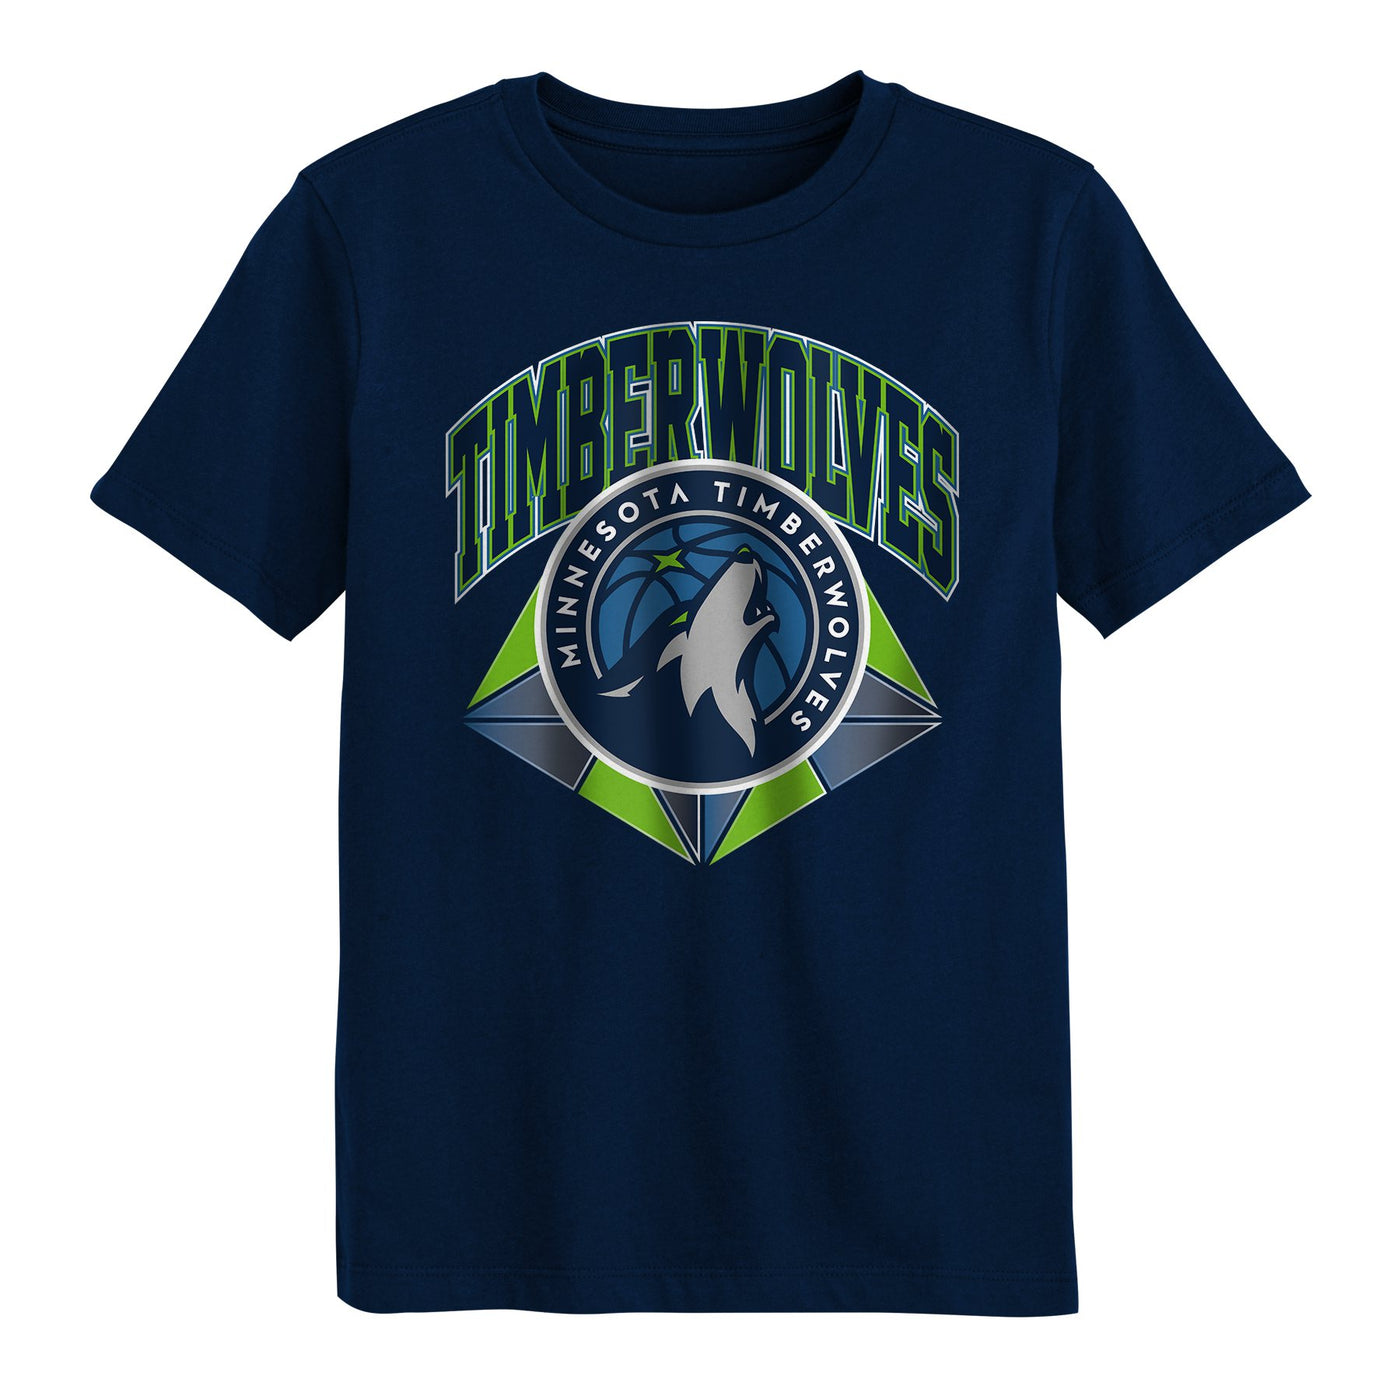 Boys Minnesota Timberwolves Global Games T-Shirt